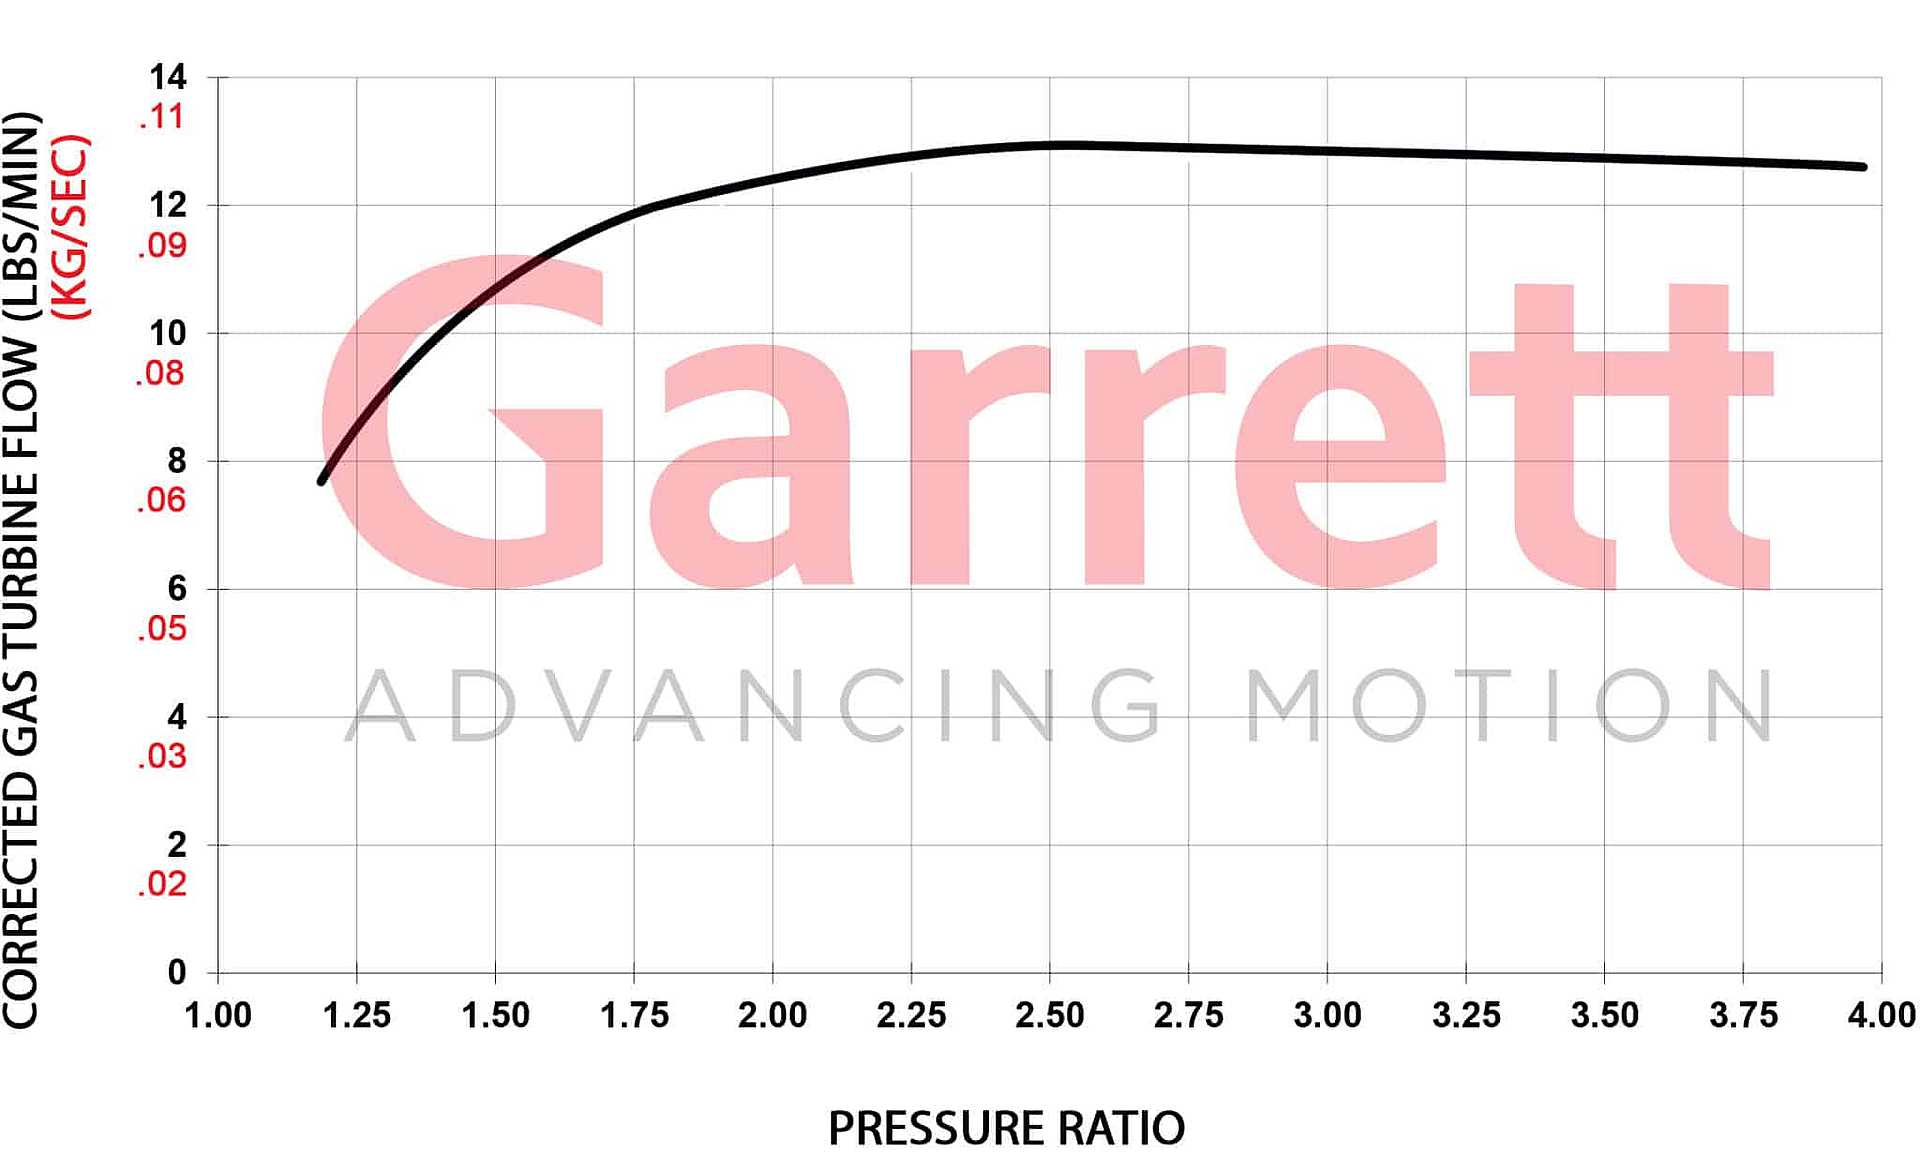 Garrett GBC20-300 Turbocharger 0.55 A/R IWG